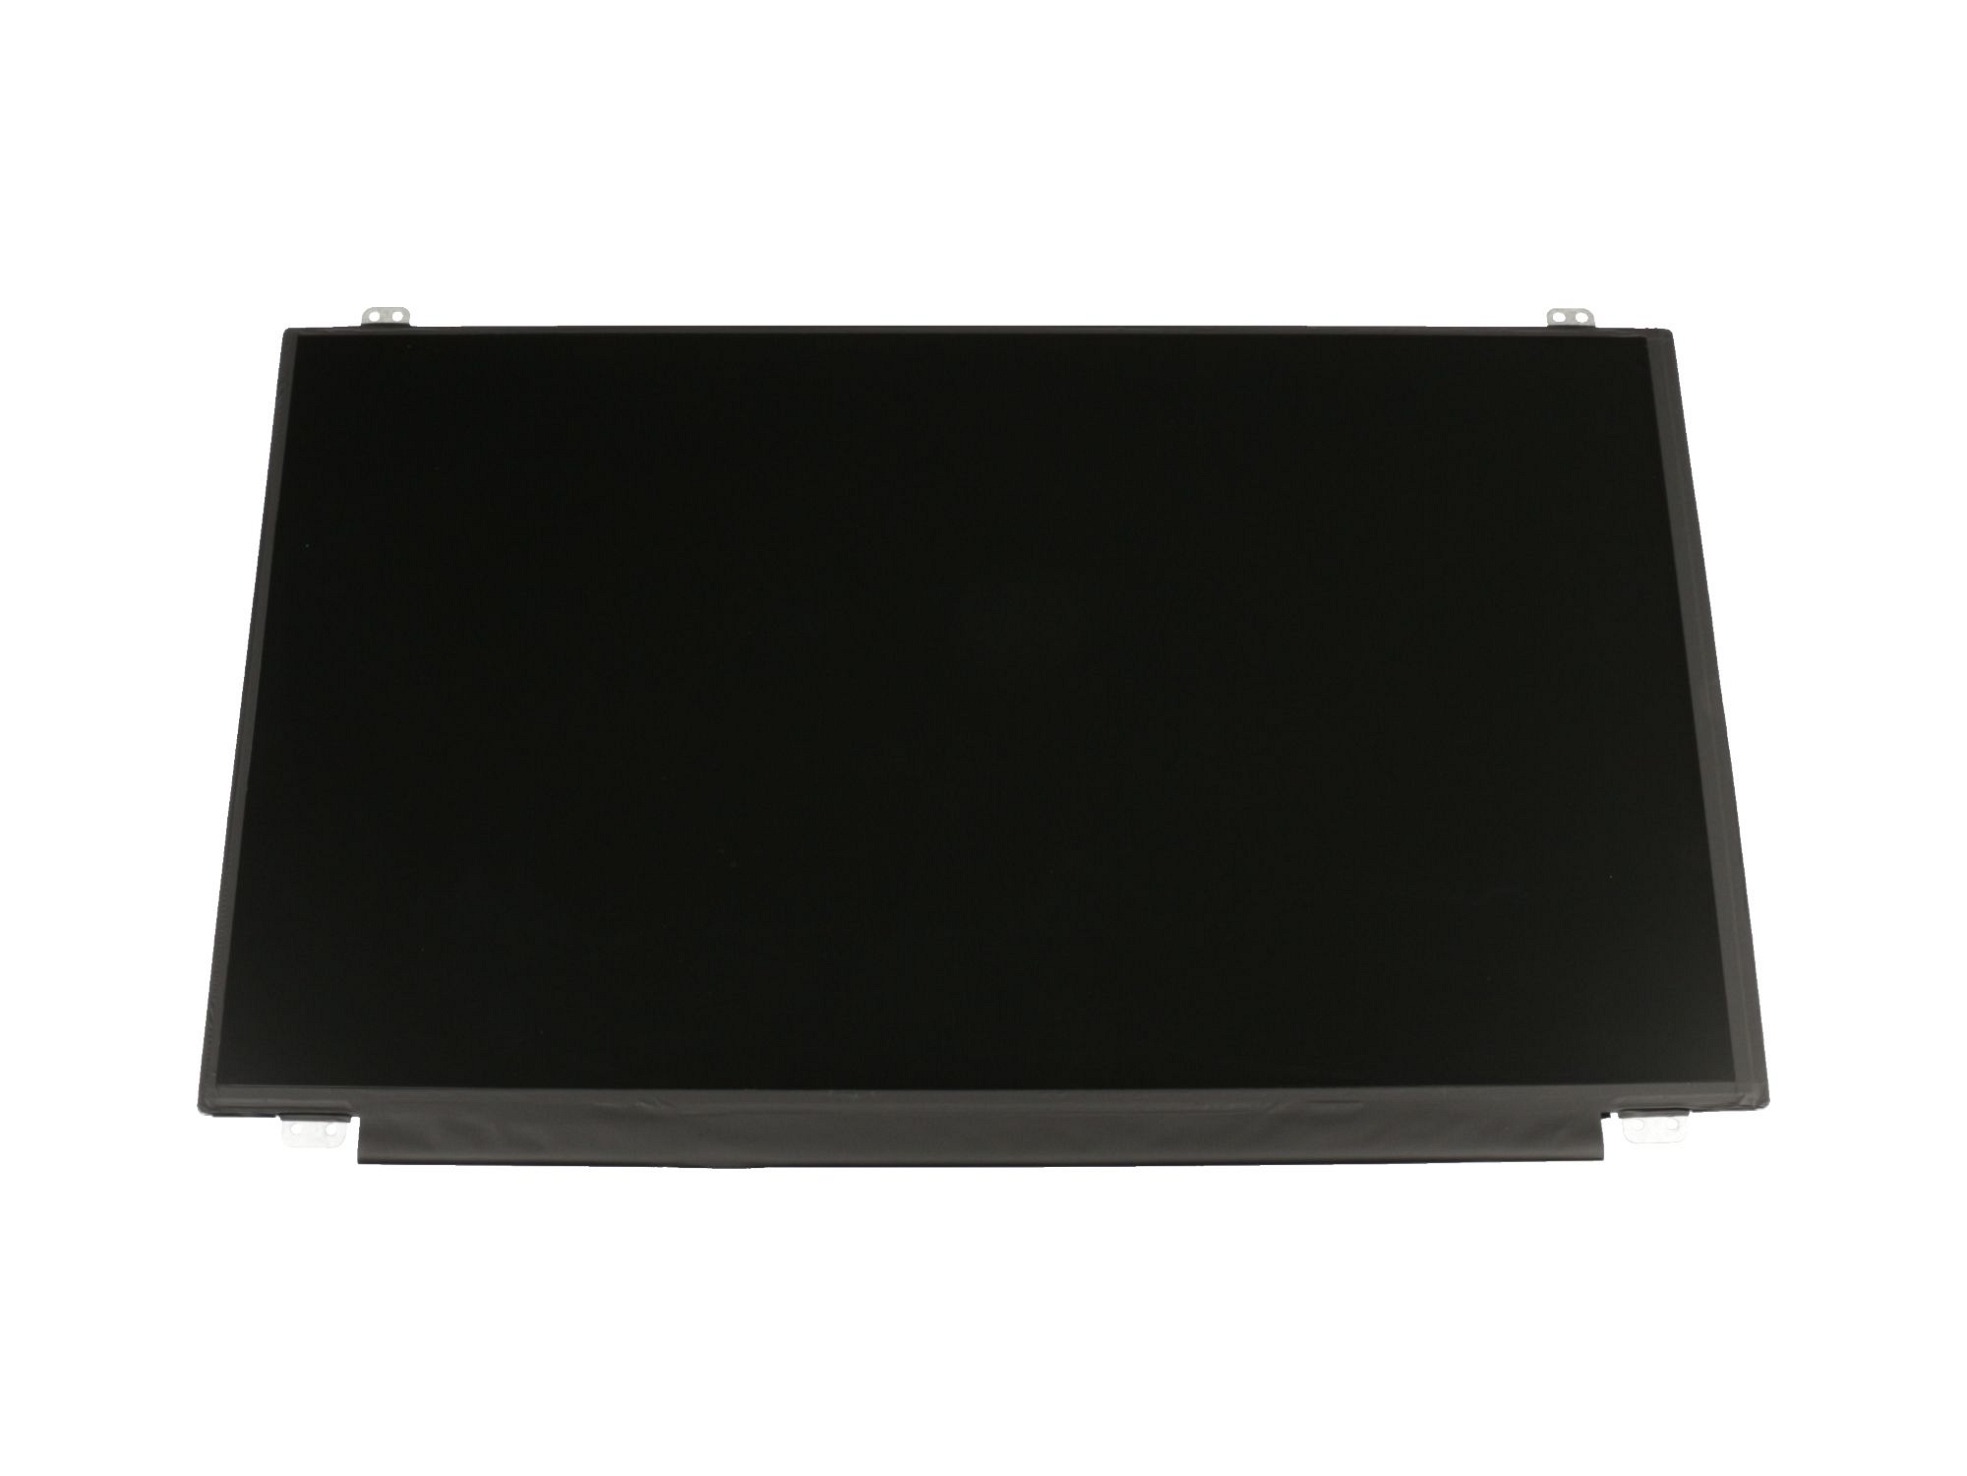 LG LP156WH3-TPS1 Display (1366x768) matt slimline